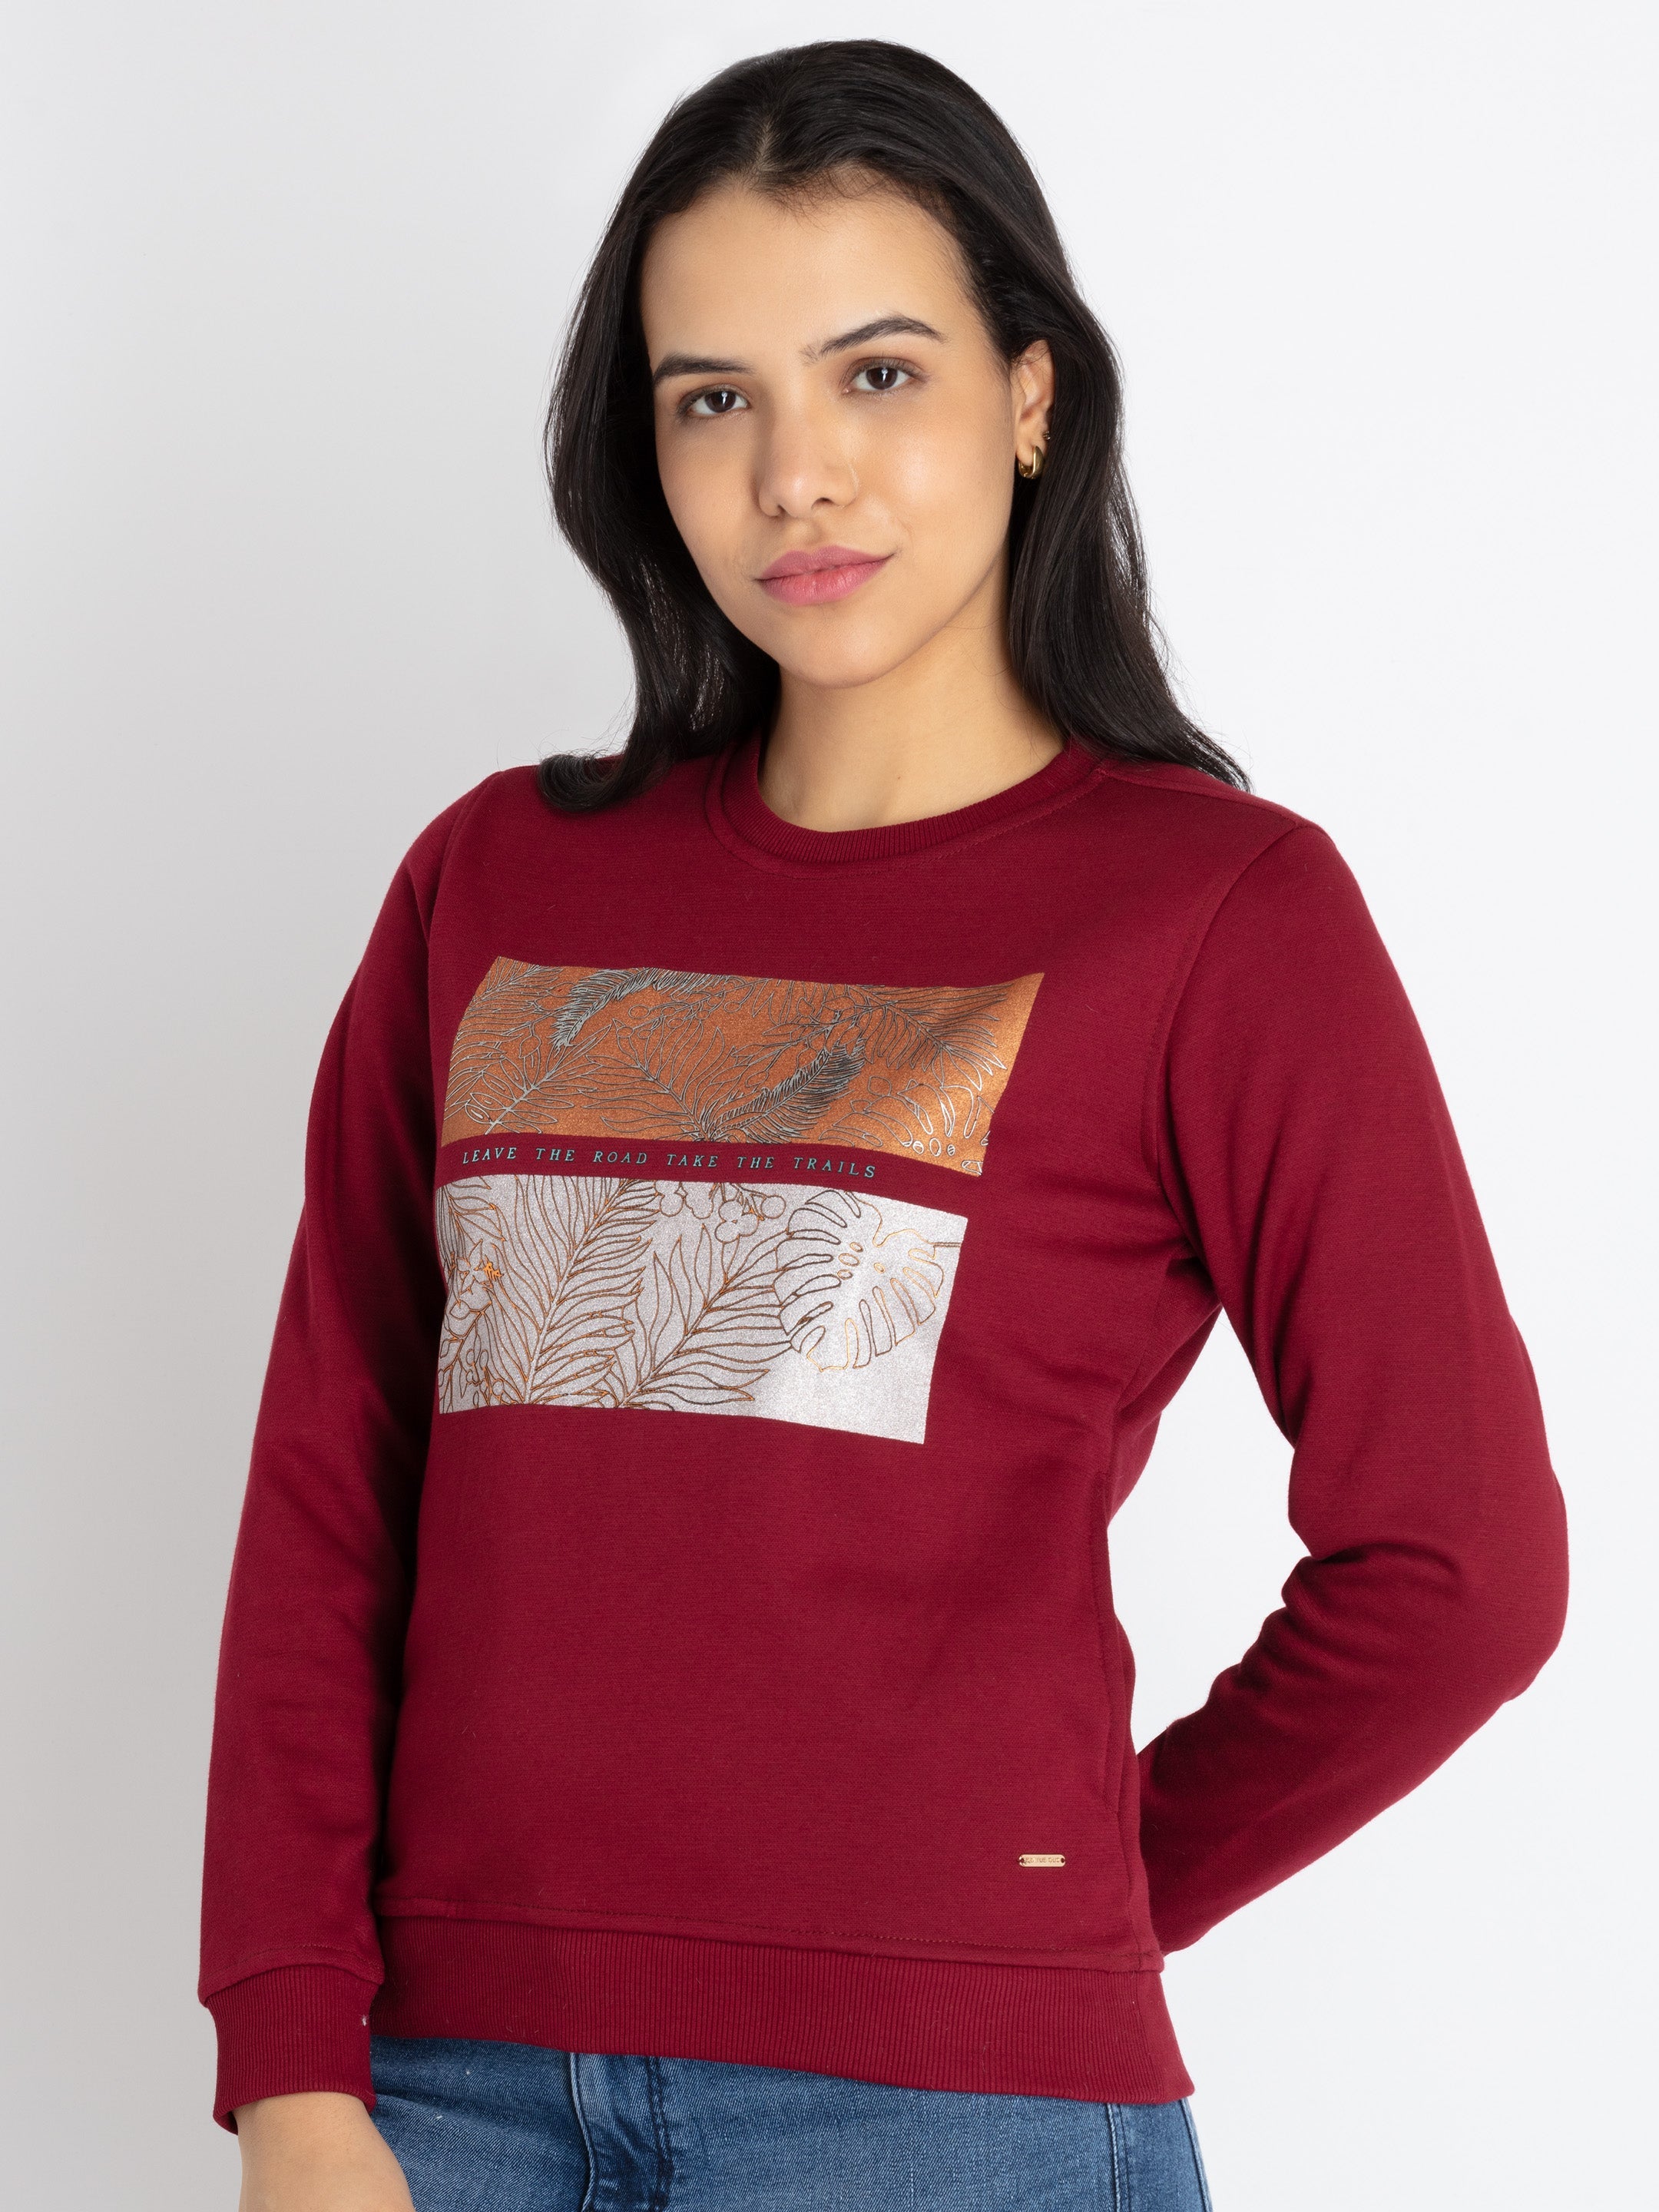 printed sweatshirt for women